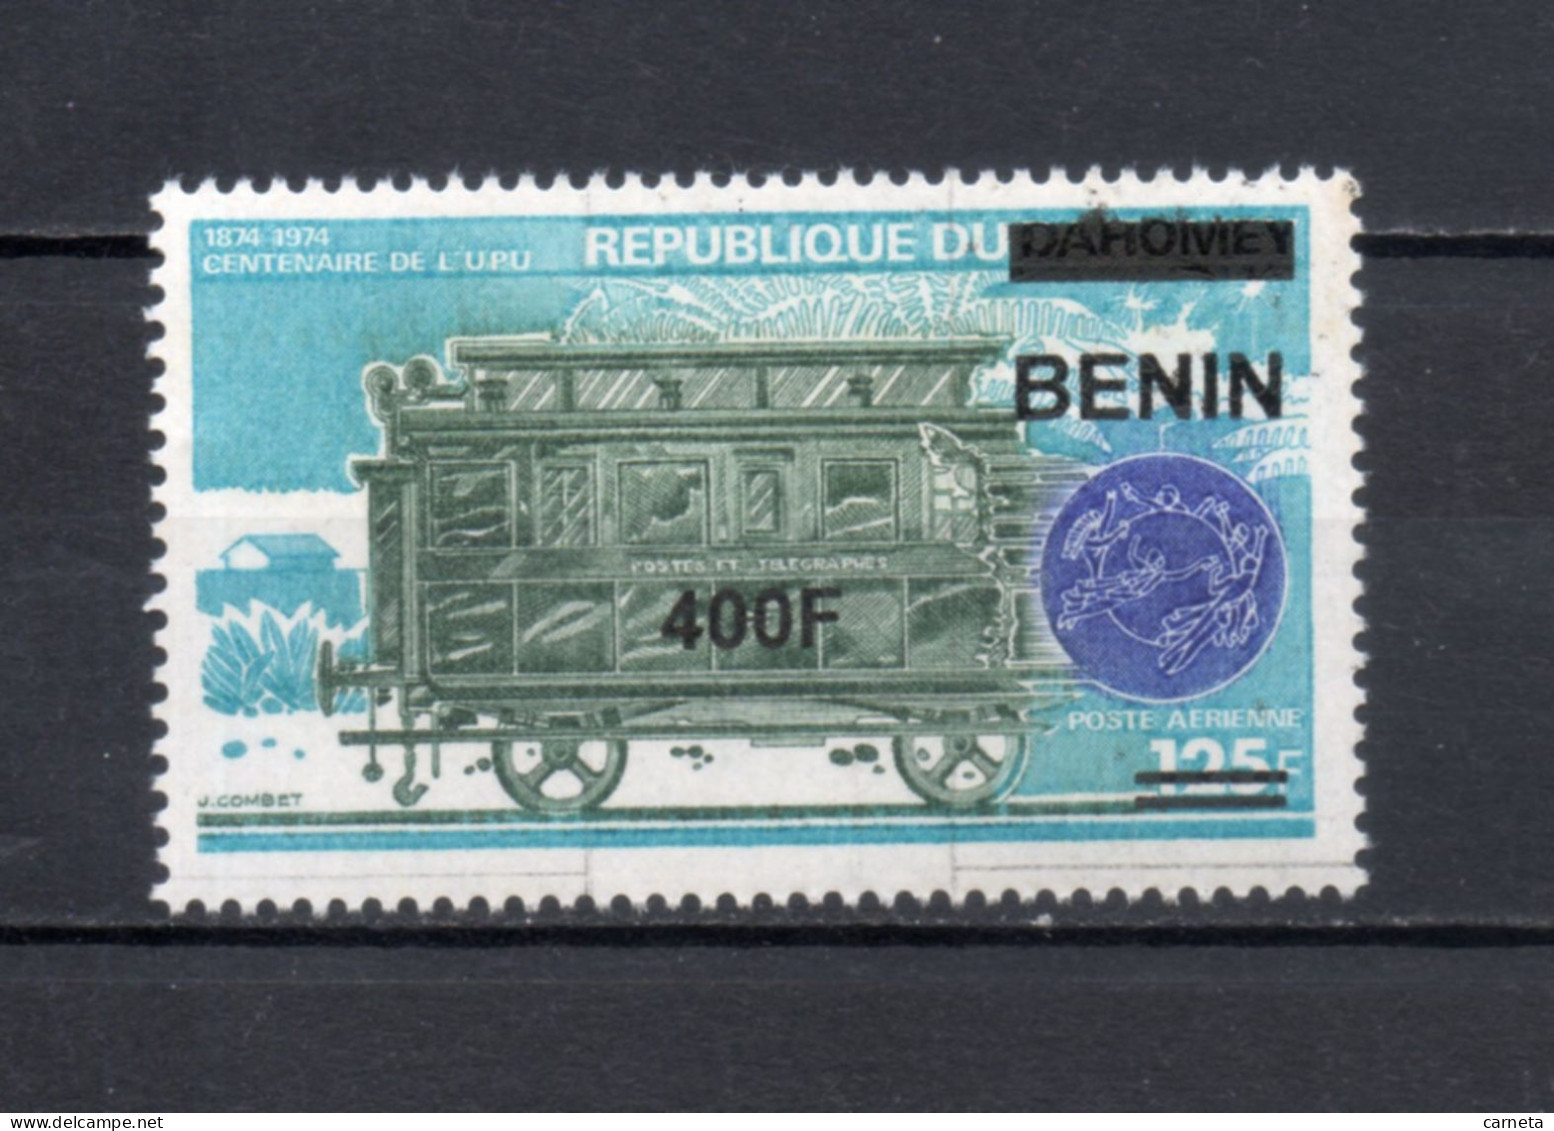 BENIN   N° 1186  NEUF SANS CHARNIERE  COTE  40.00€   TRAIN UPU  VOIR DESCRIPTION - Benin – Dahomey (1960-...)